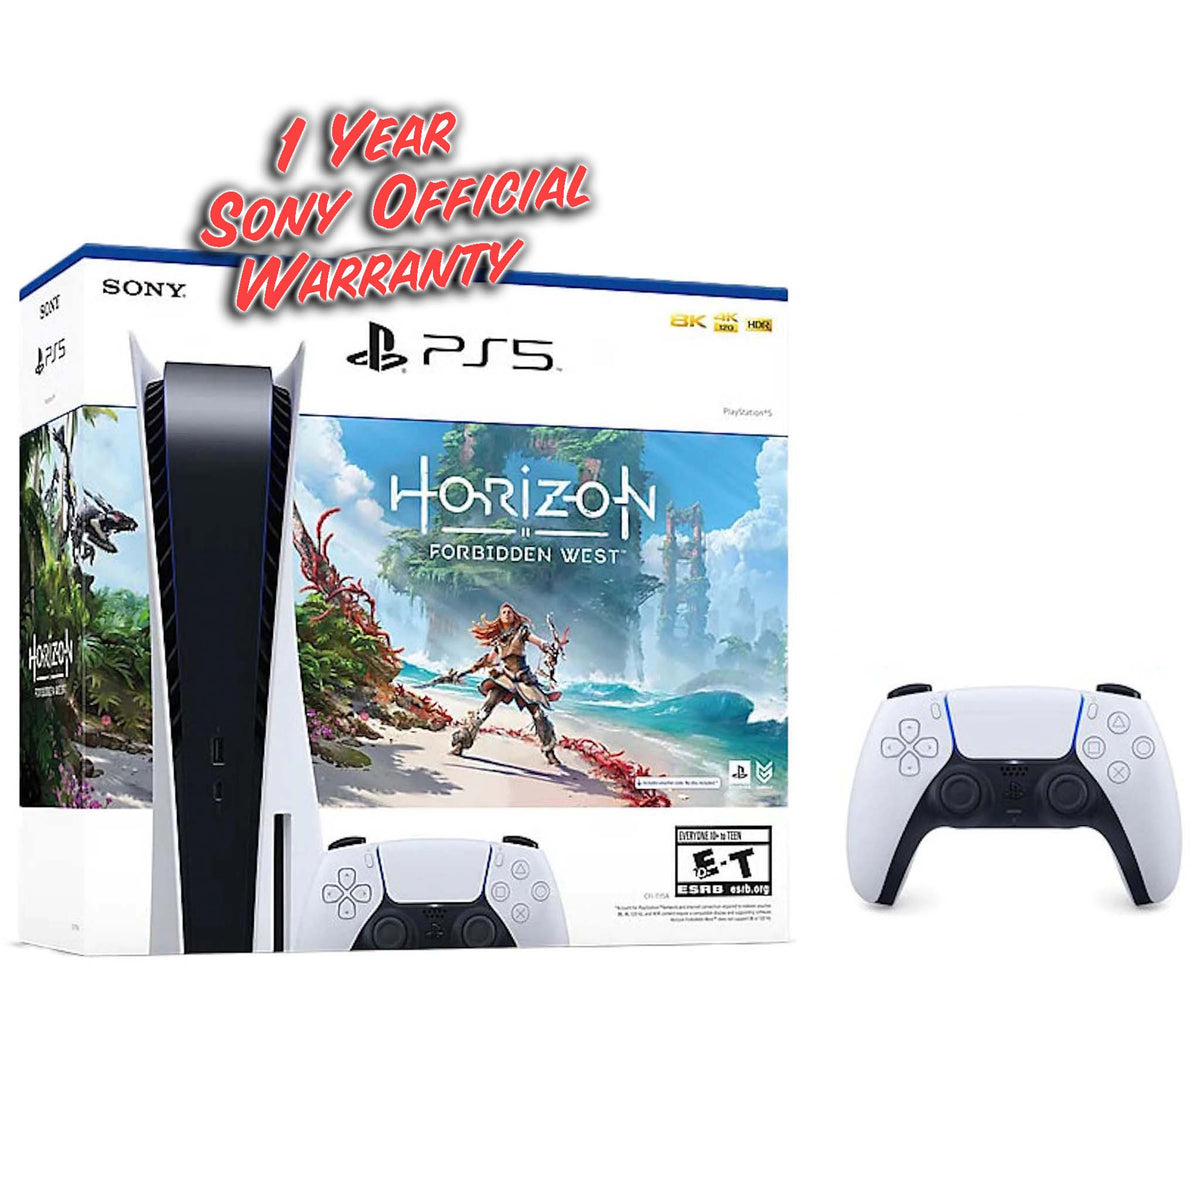  Horizon Forbidden West Complete Edition - PS5™ : Video